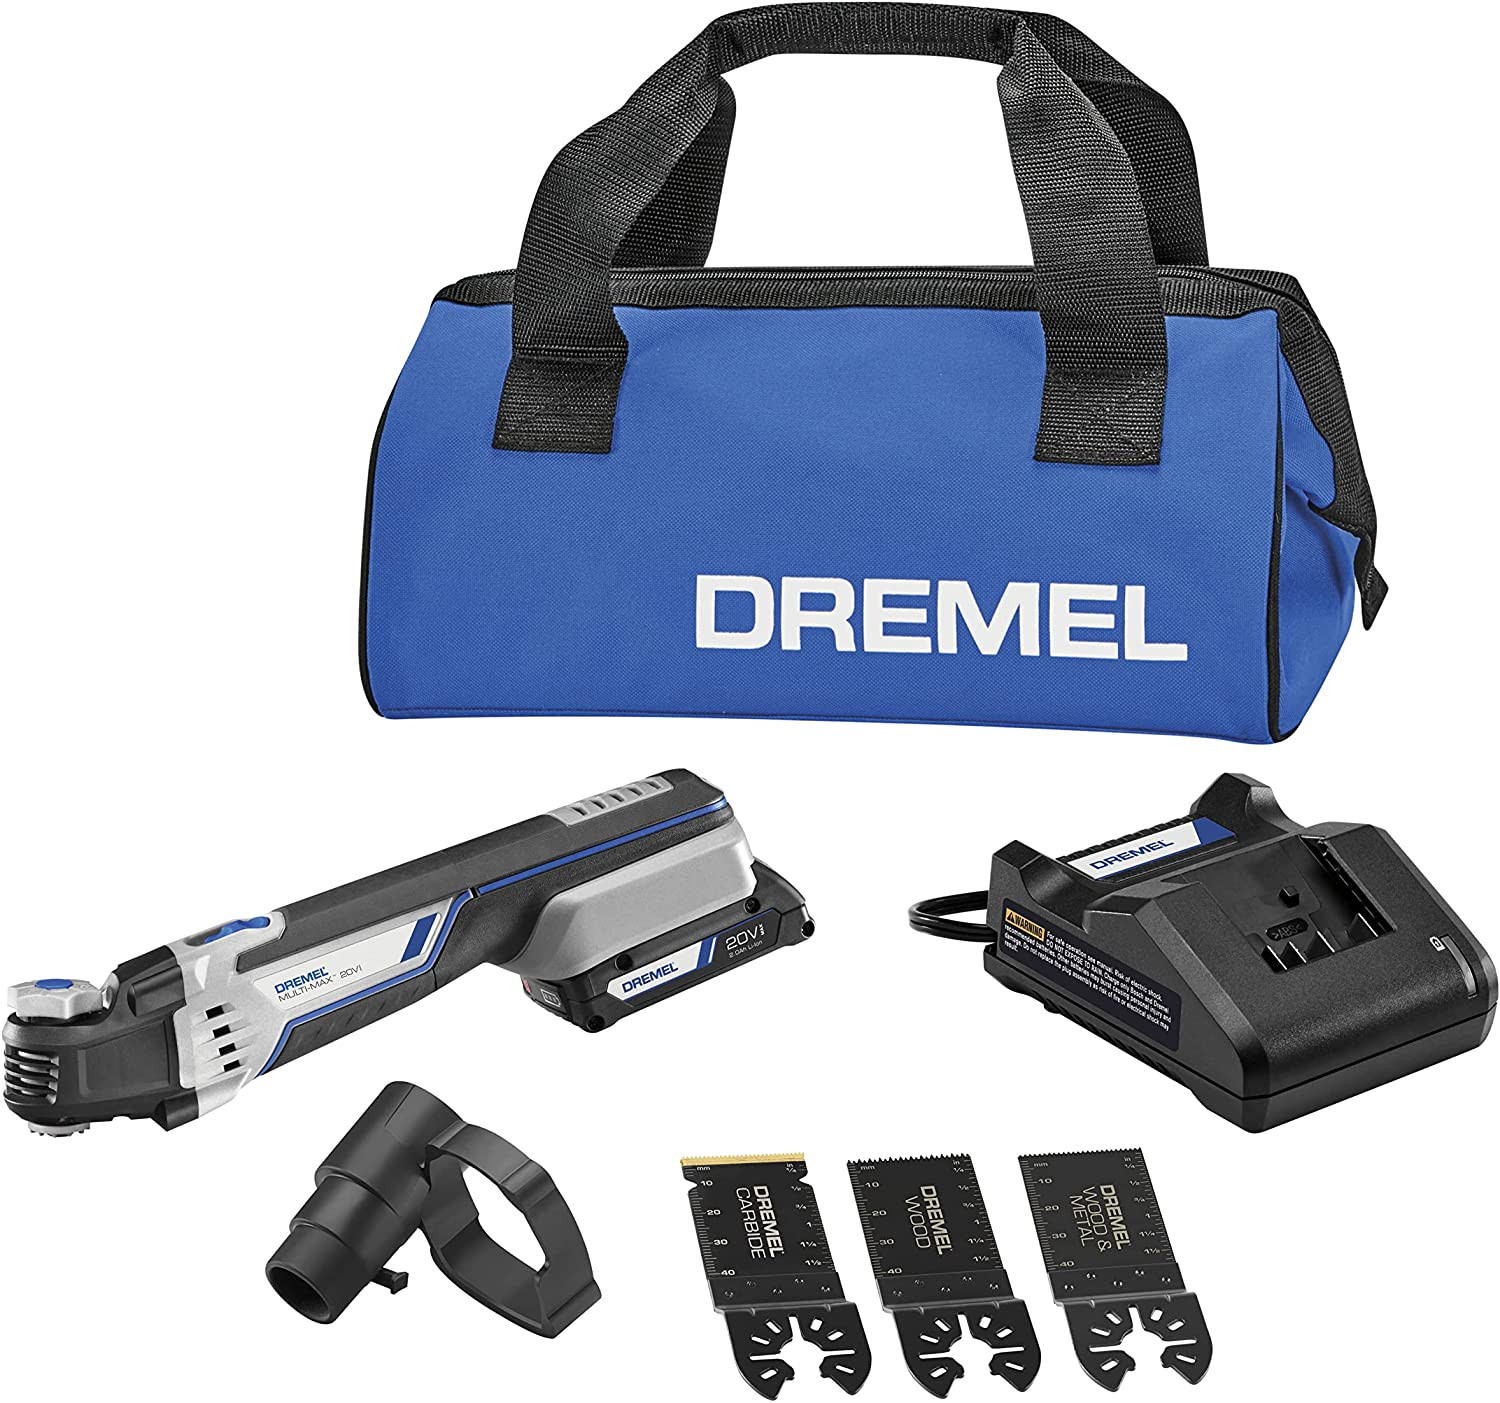 Dremel Multi-Max MM20V-01 Cordless Oscillating Multi-Tool Kit with (1) Battery